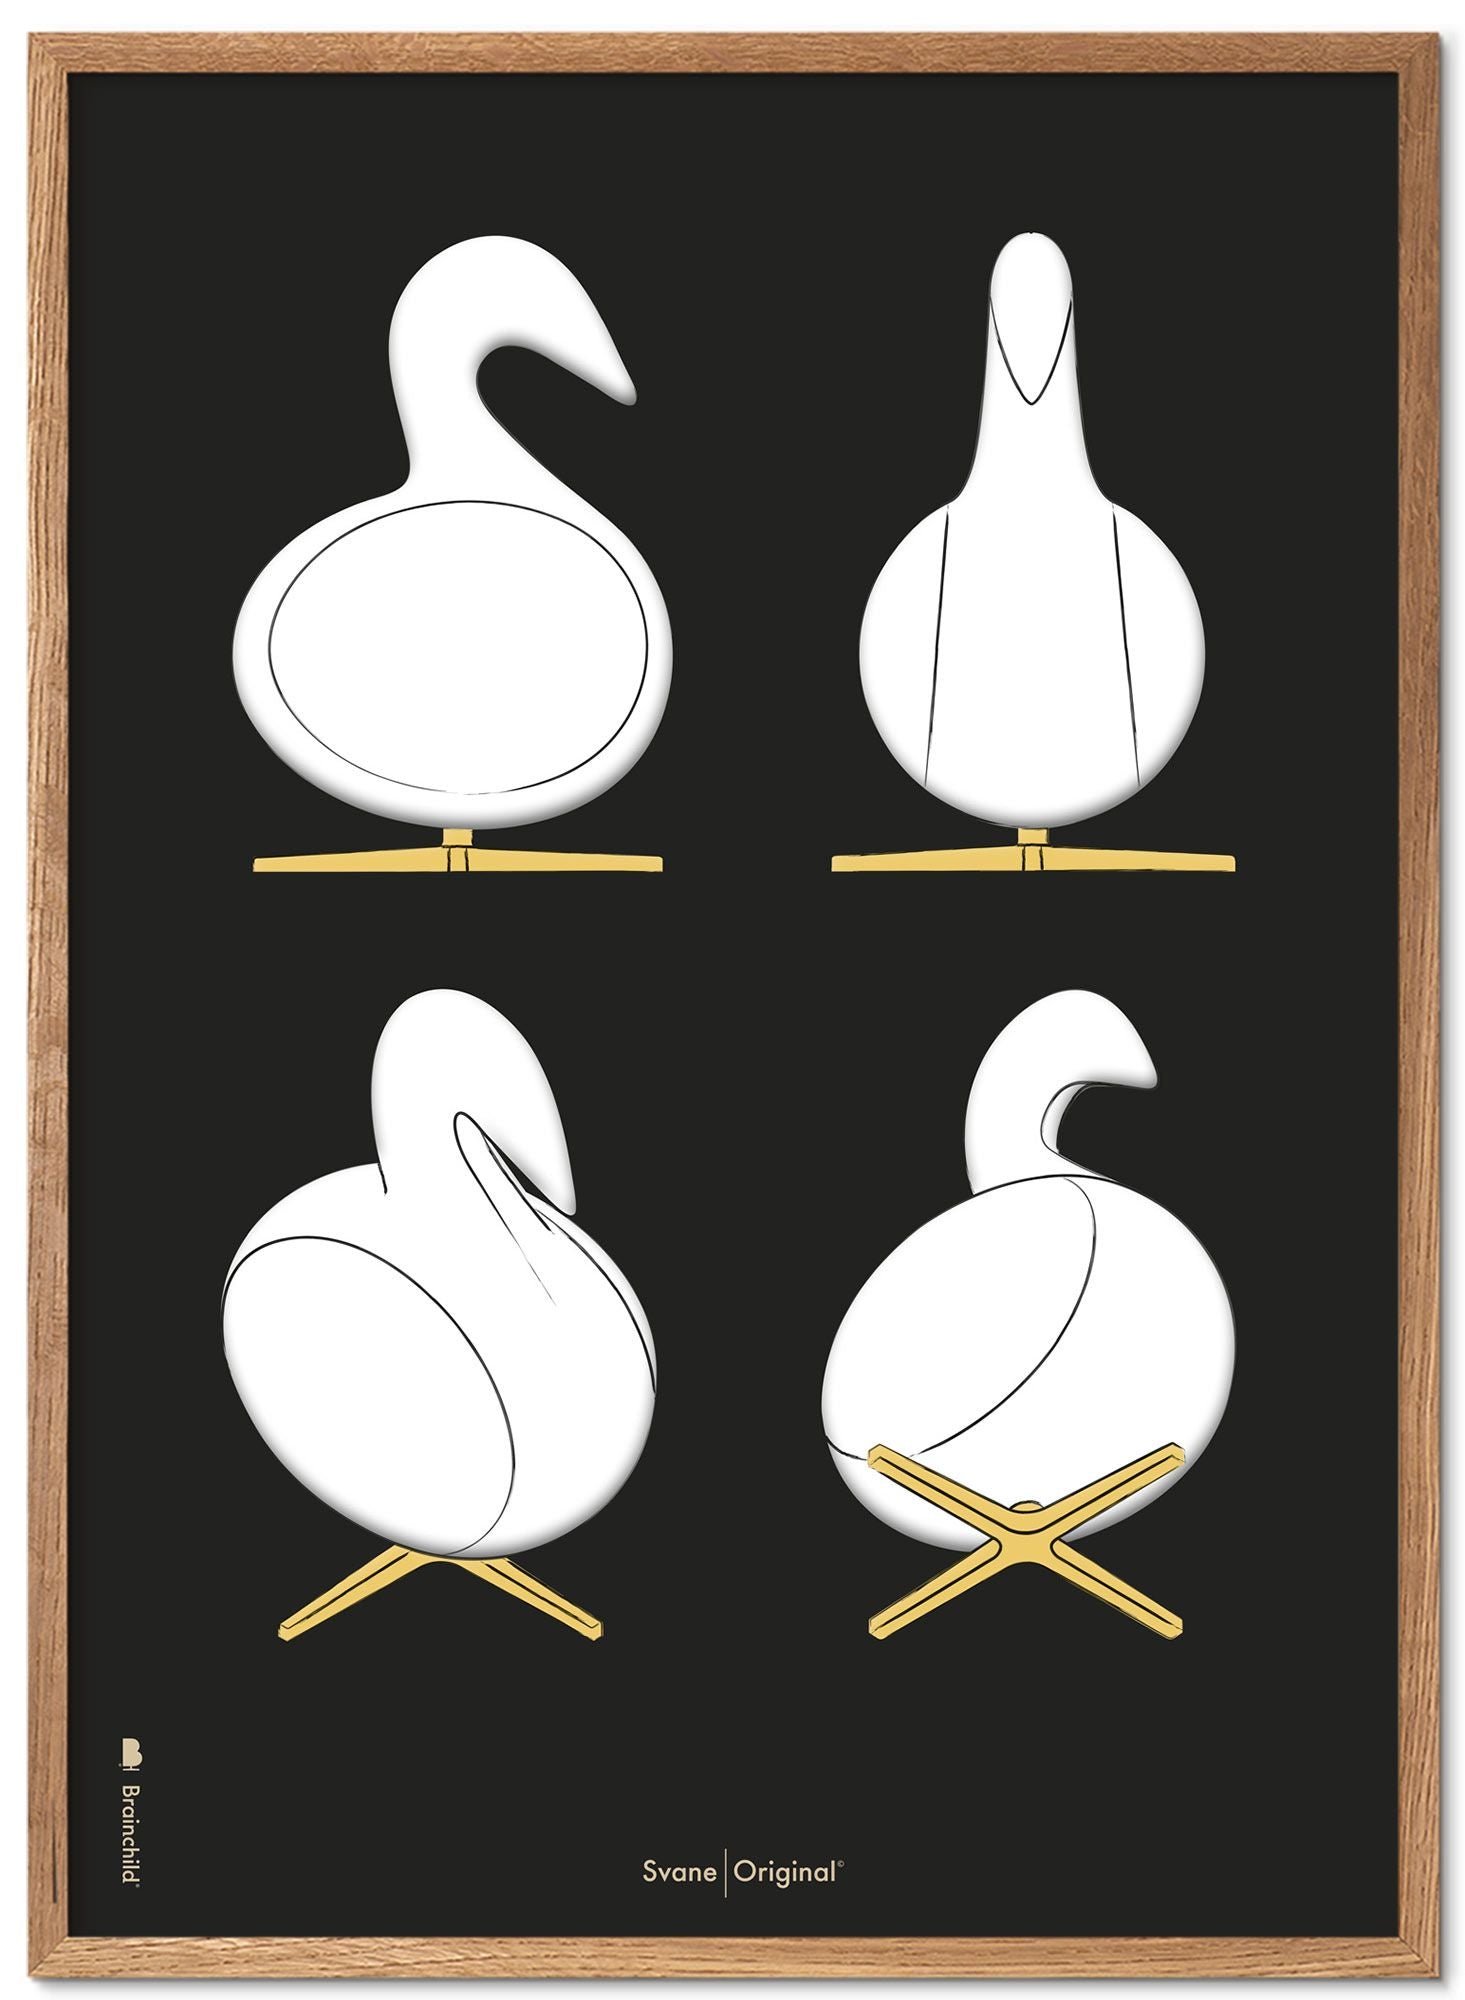 Brainchild Swan Design Sketches Poster Frame Made Of Light Wood 30x40 Cm, Black Background